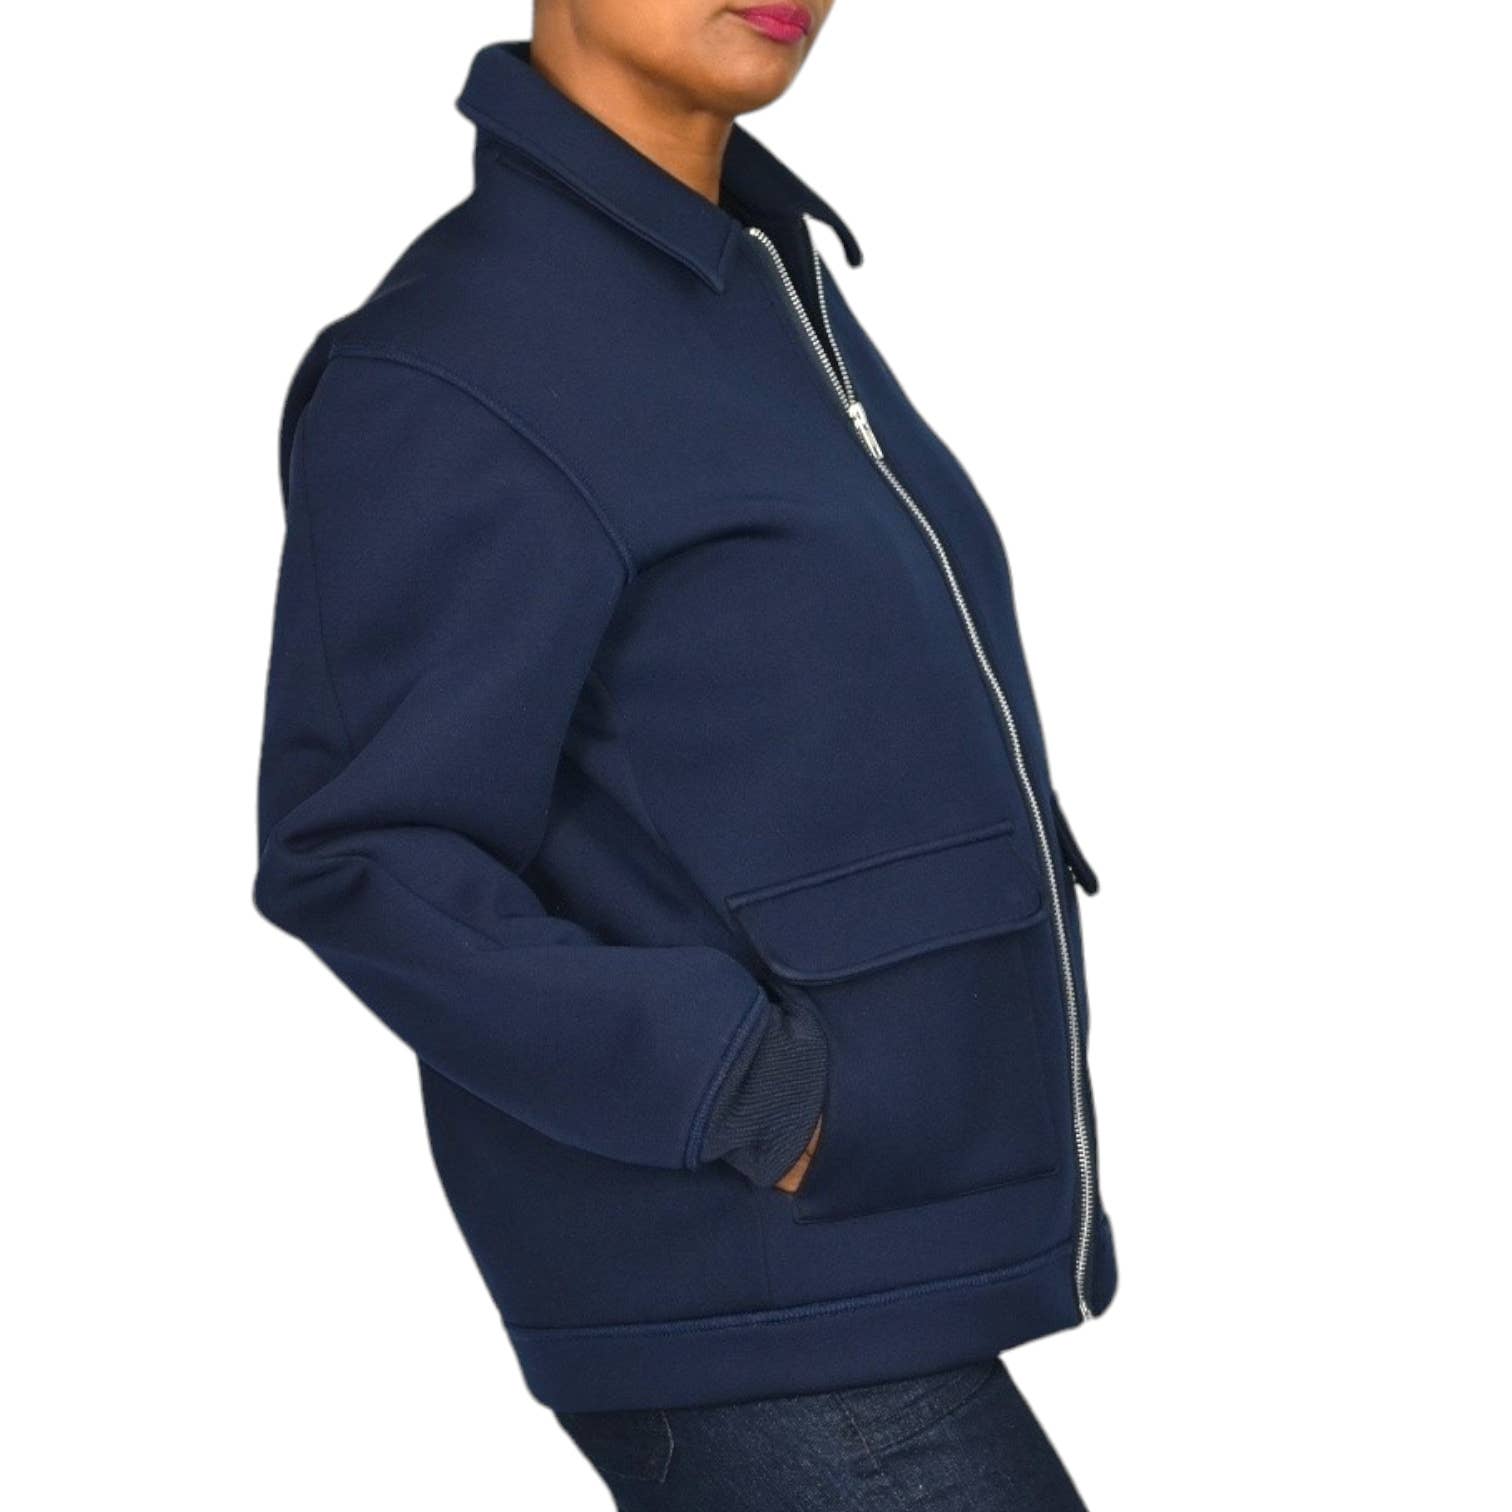 ASOS Scuba Jacket Navy Blue Utility Workwear Coat Chore Zip Front Collared Size Medium